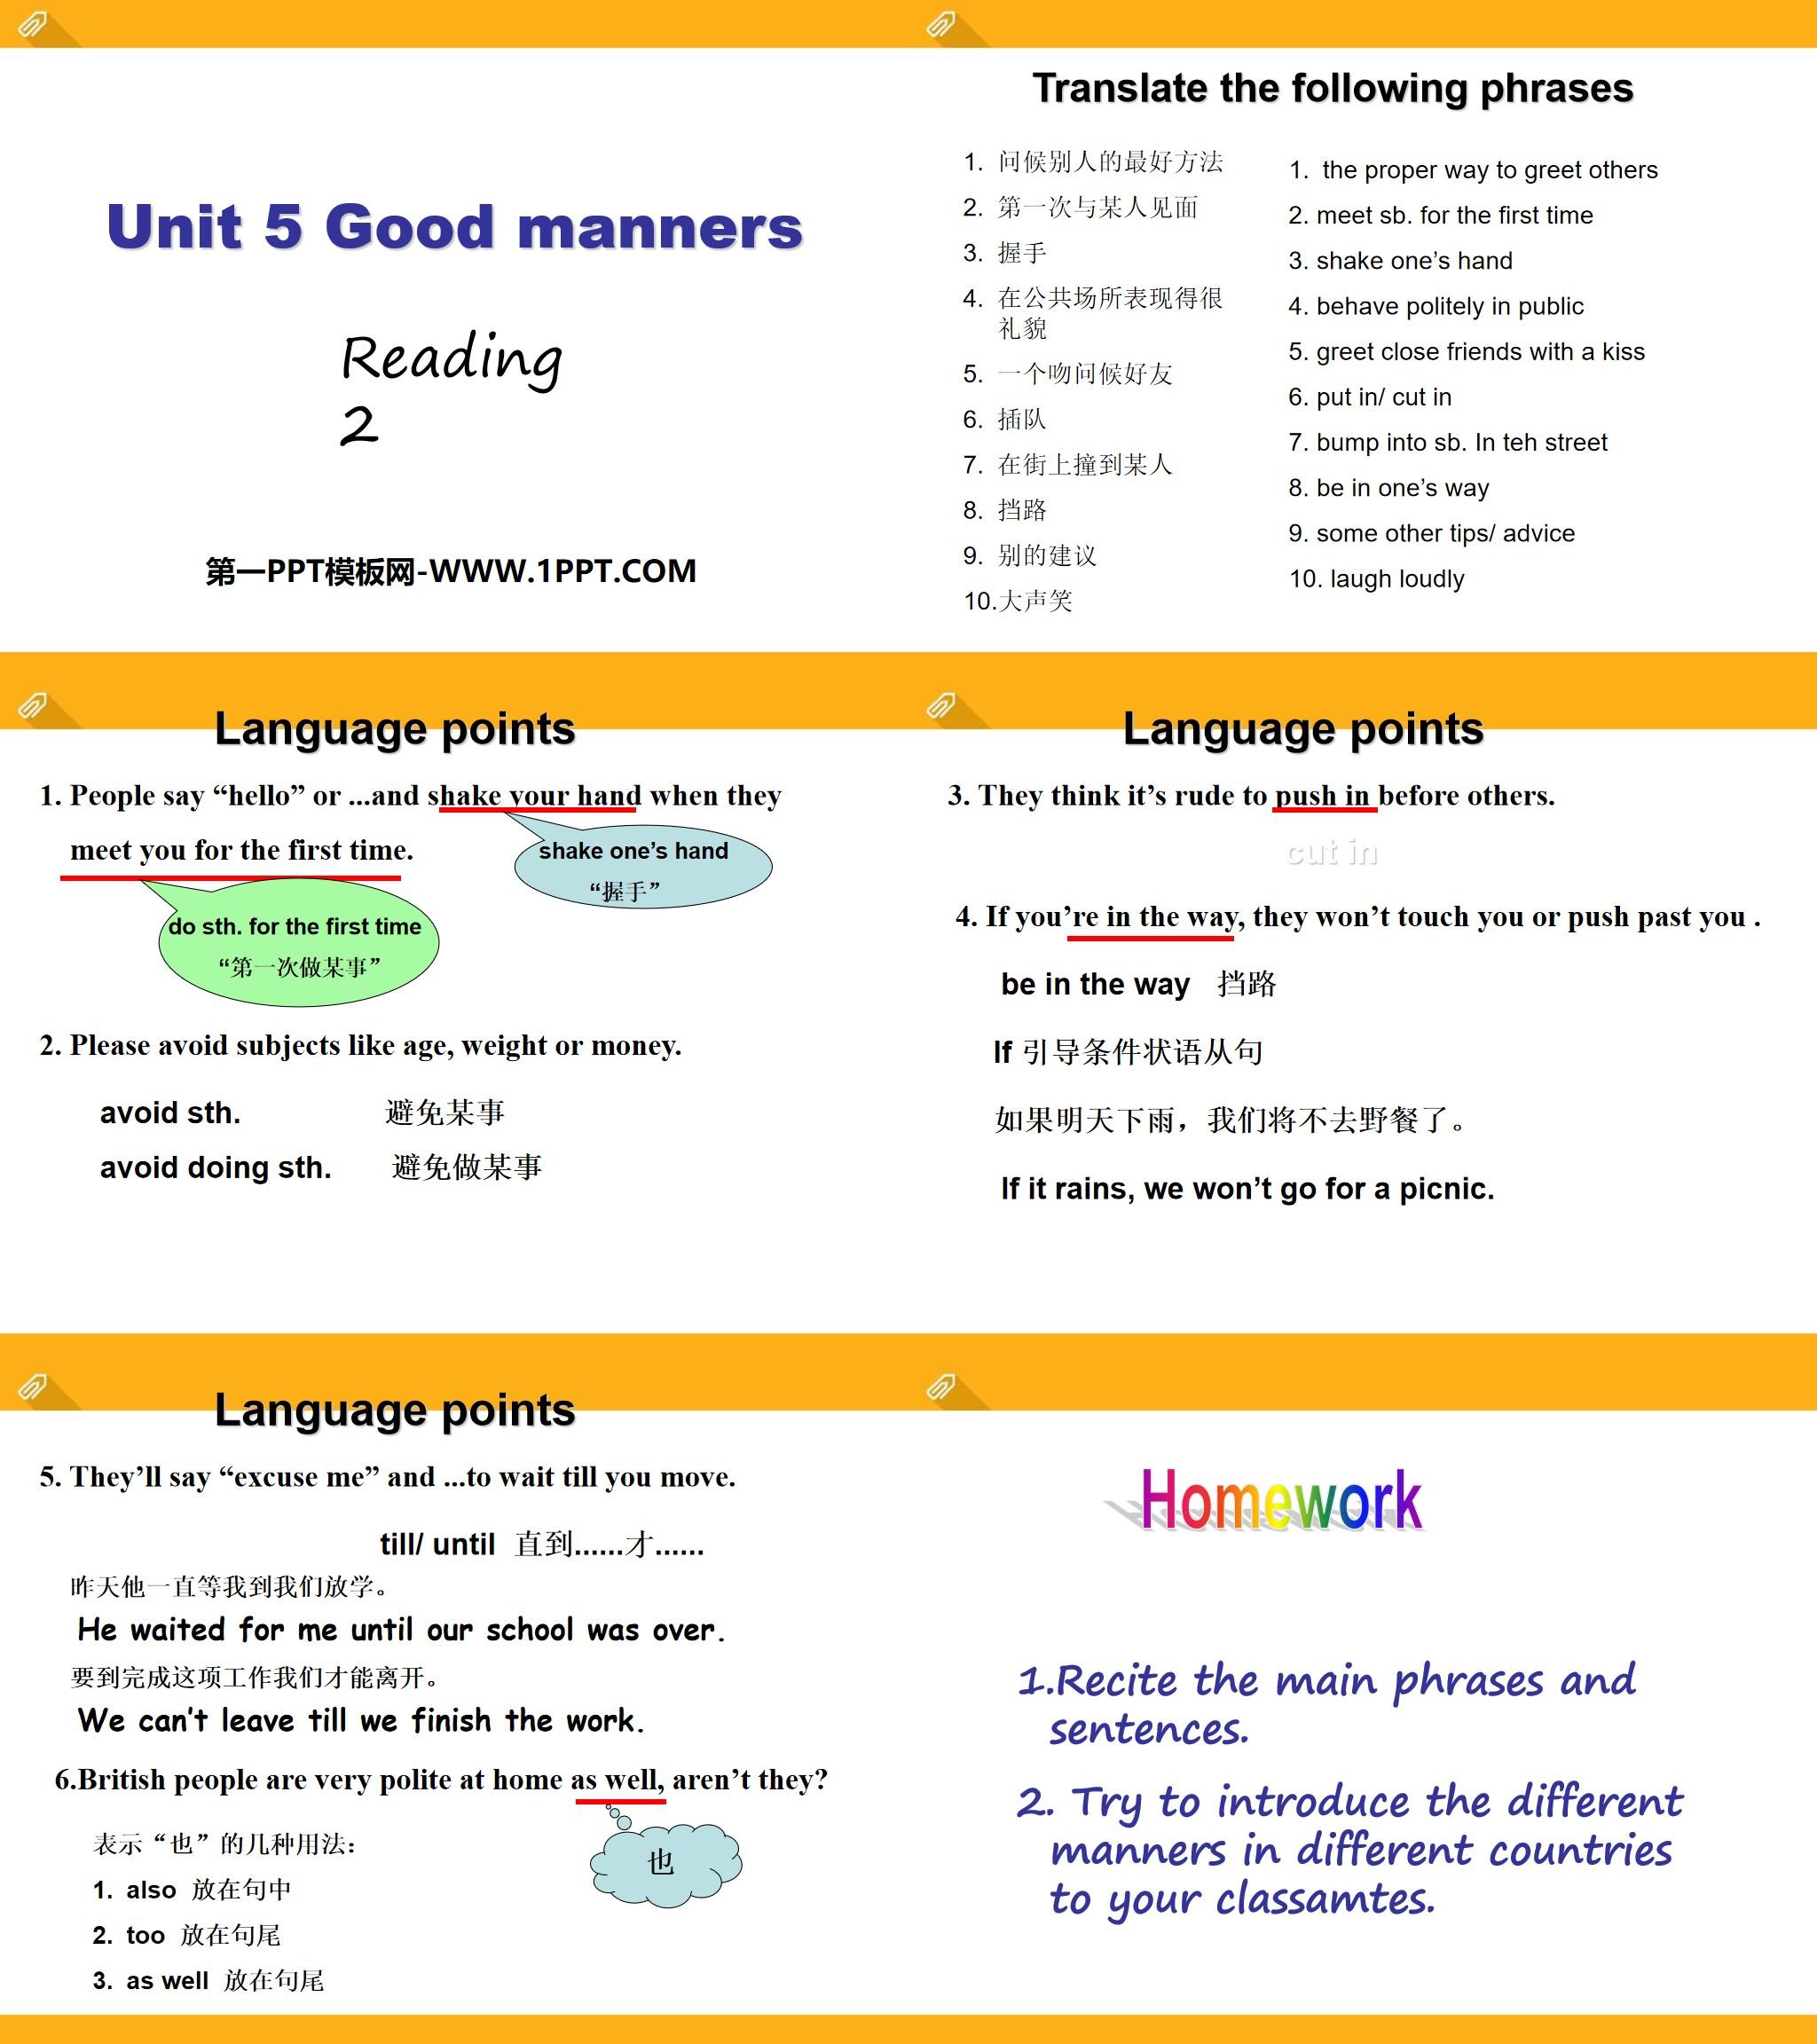 《Good manners》ReadingPPT课件
（2）